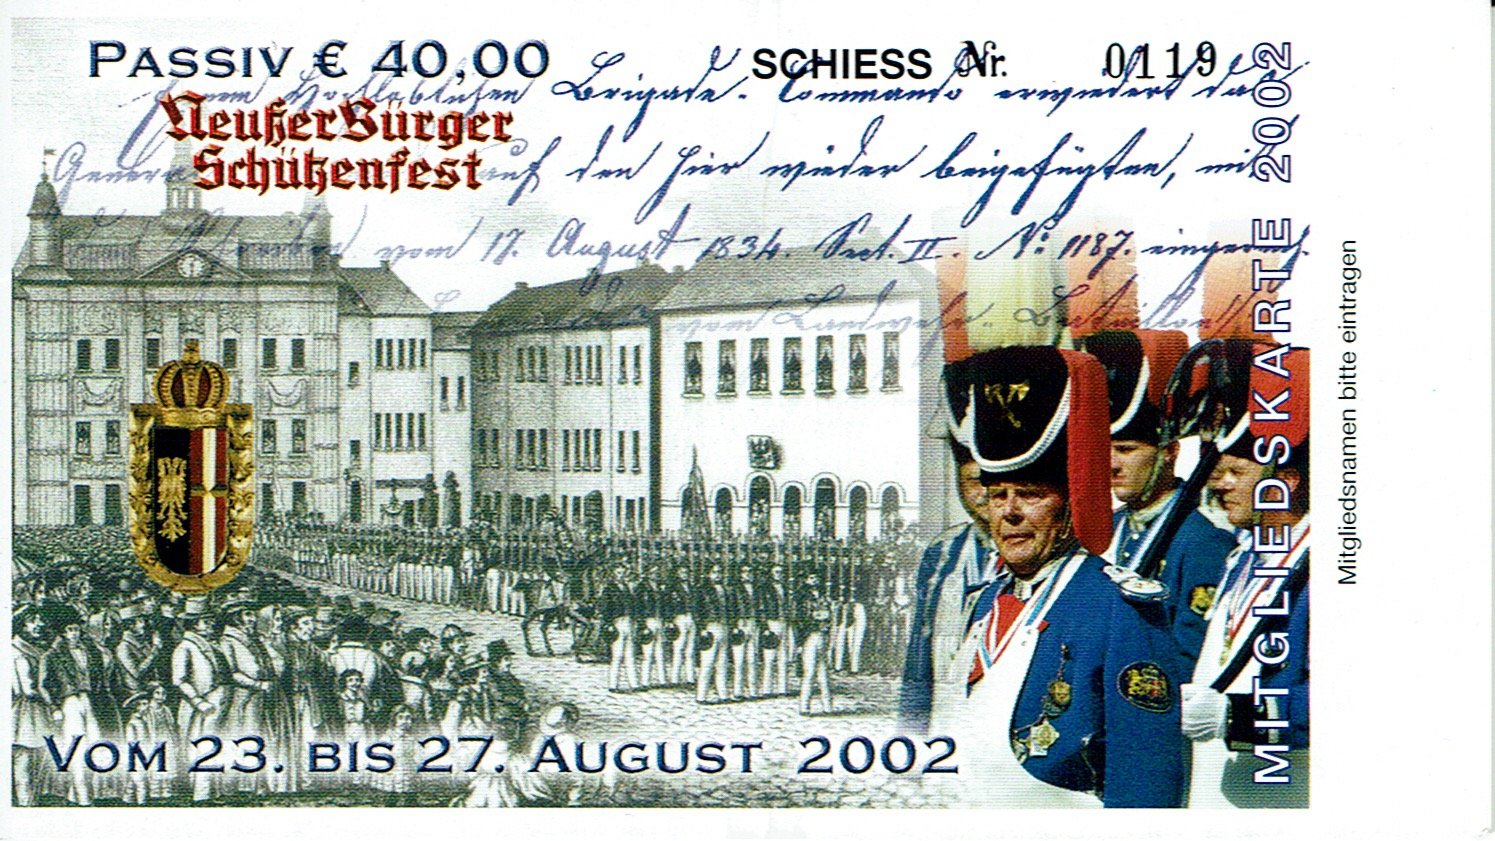 Festkarte Neuss 2002 (passiv) VS (Rheinisches Schützenmuseum Neuss CC BY-NC-SA)